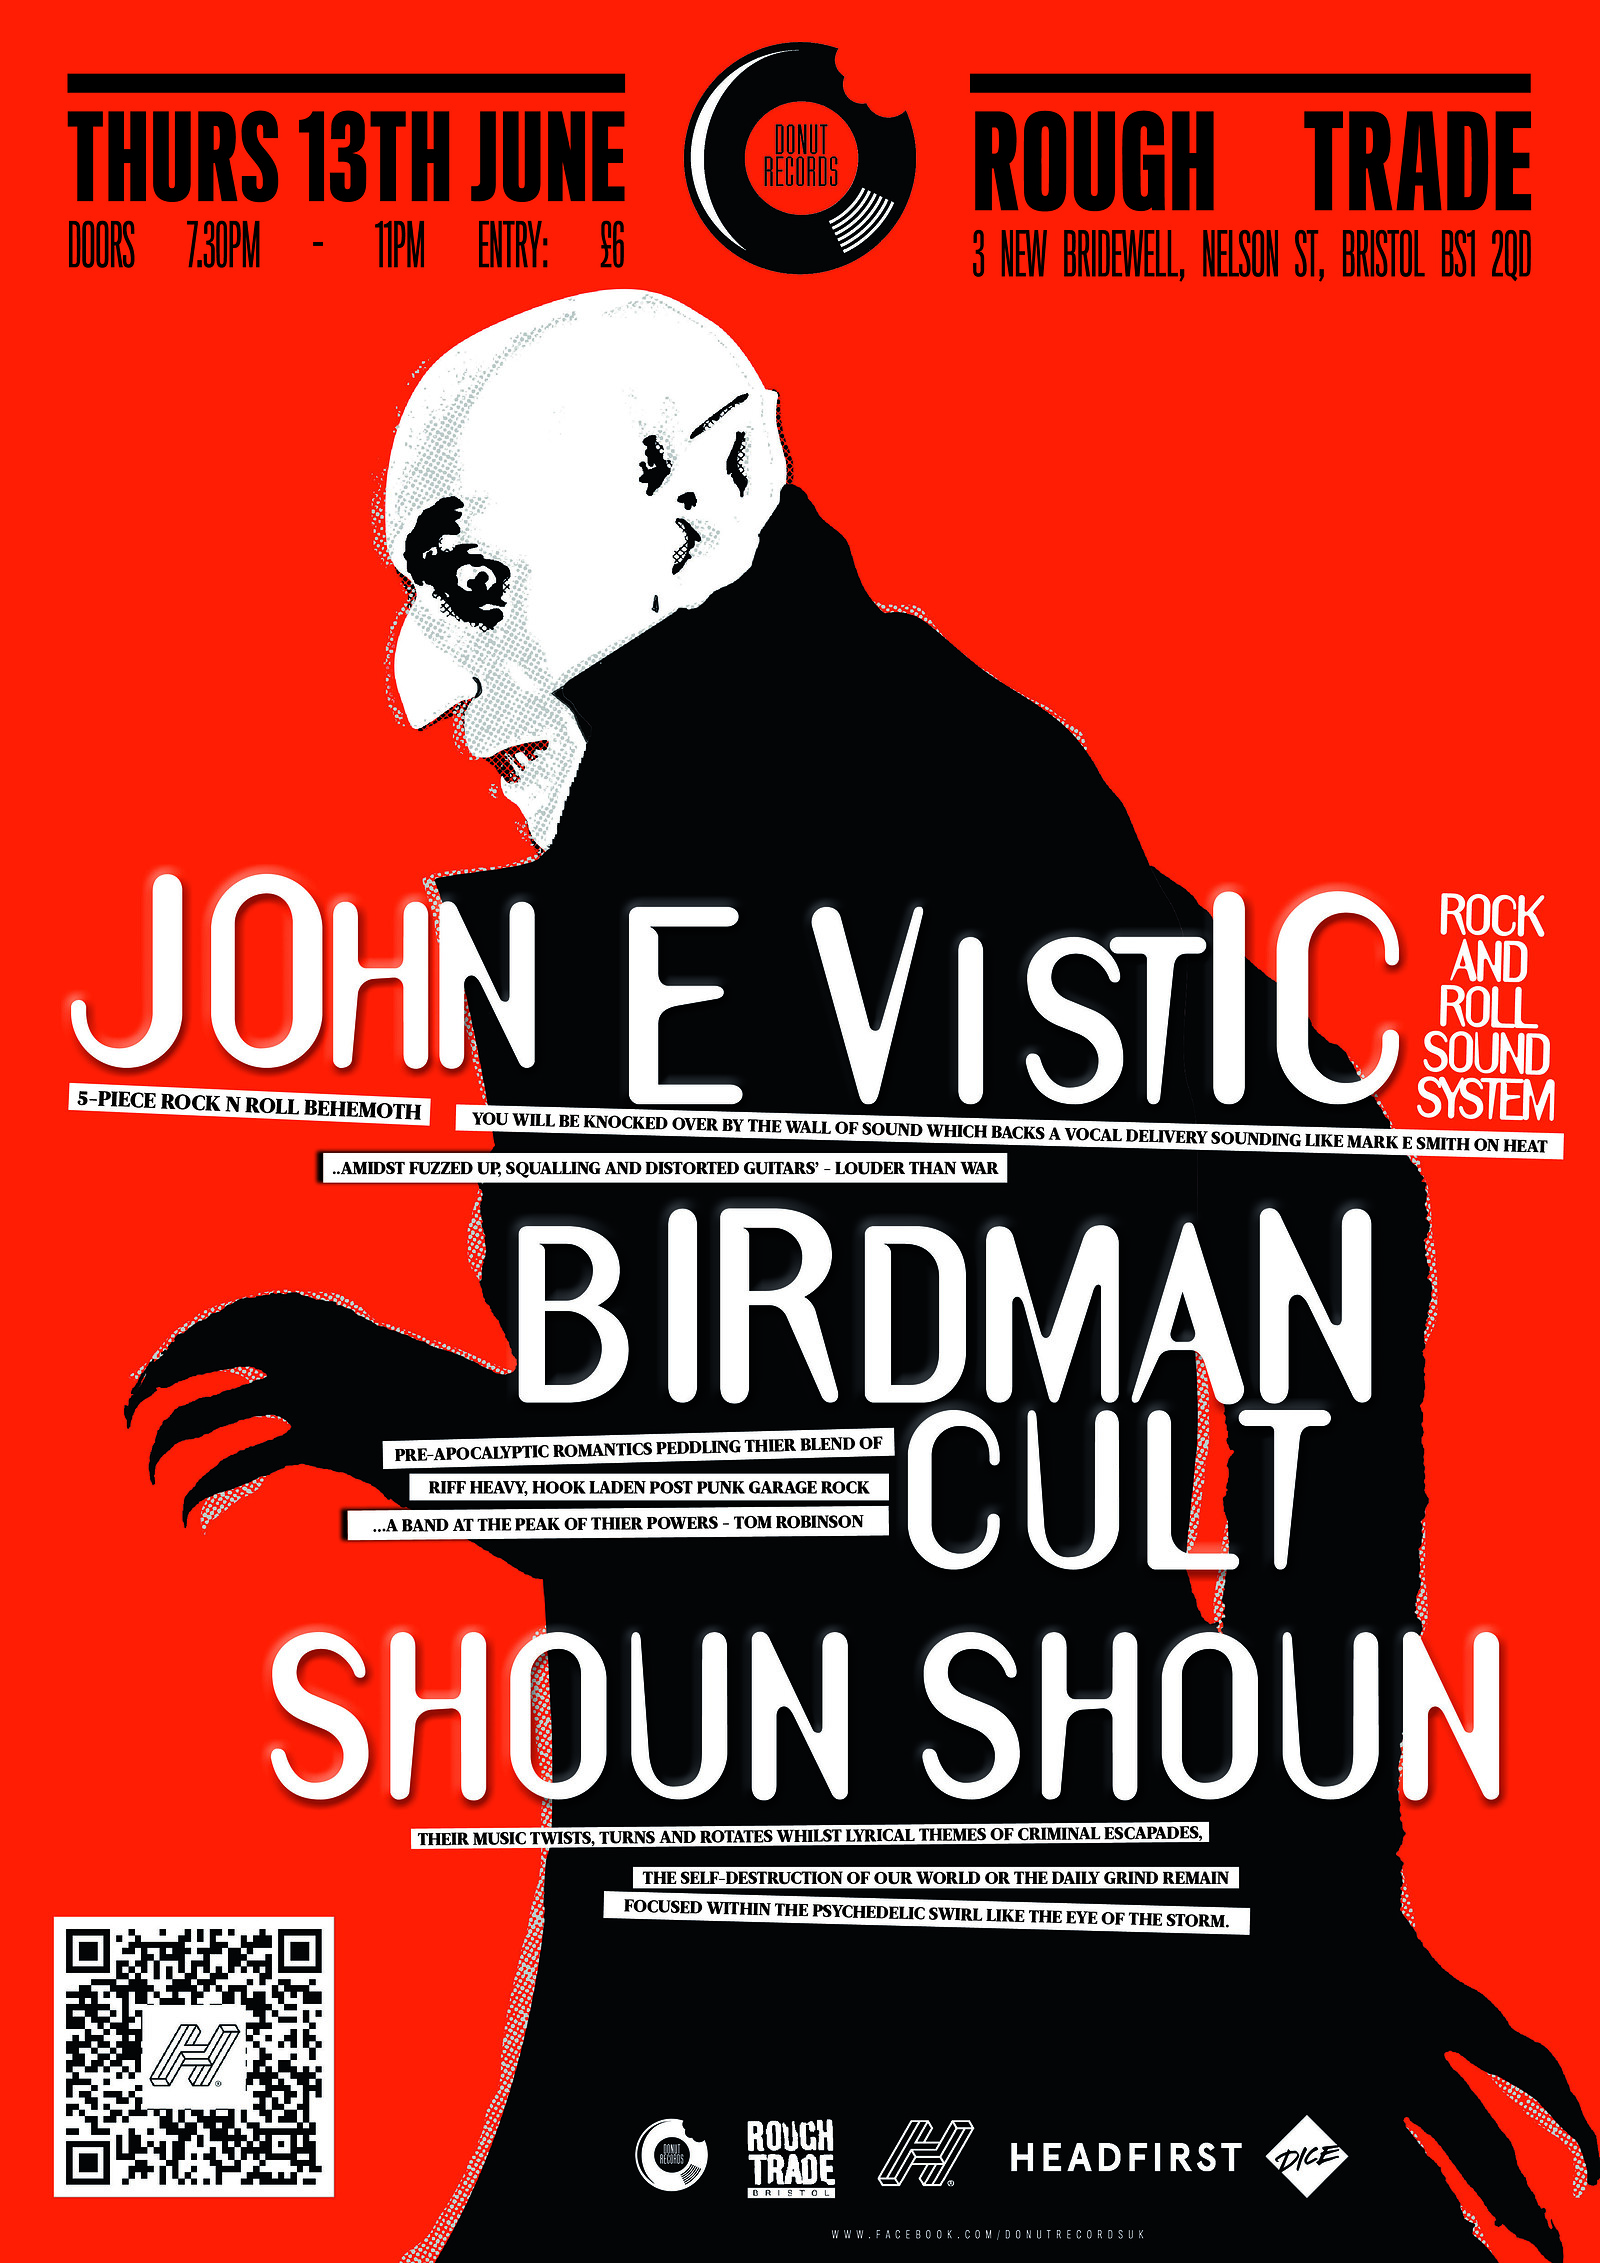 JOHN E VISTIC RNRSS / BIRDMAN CULT / SHOUN SHOUN at Rough Trade Bristol